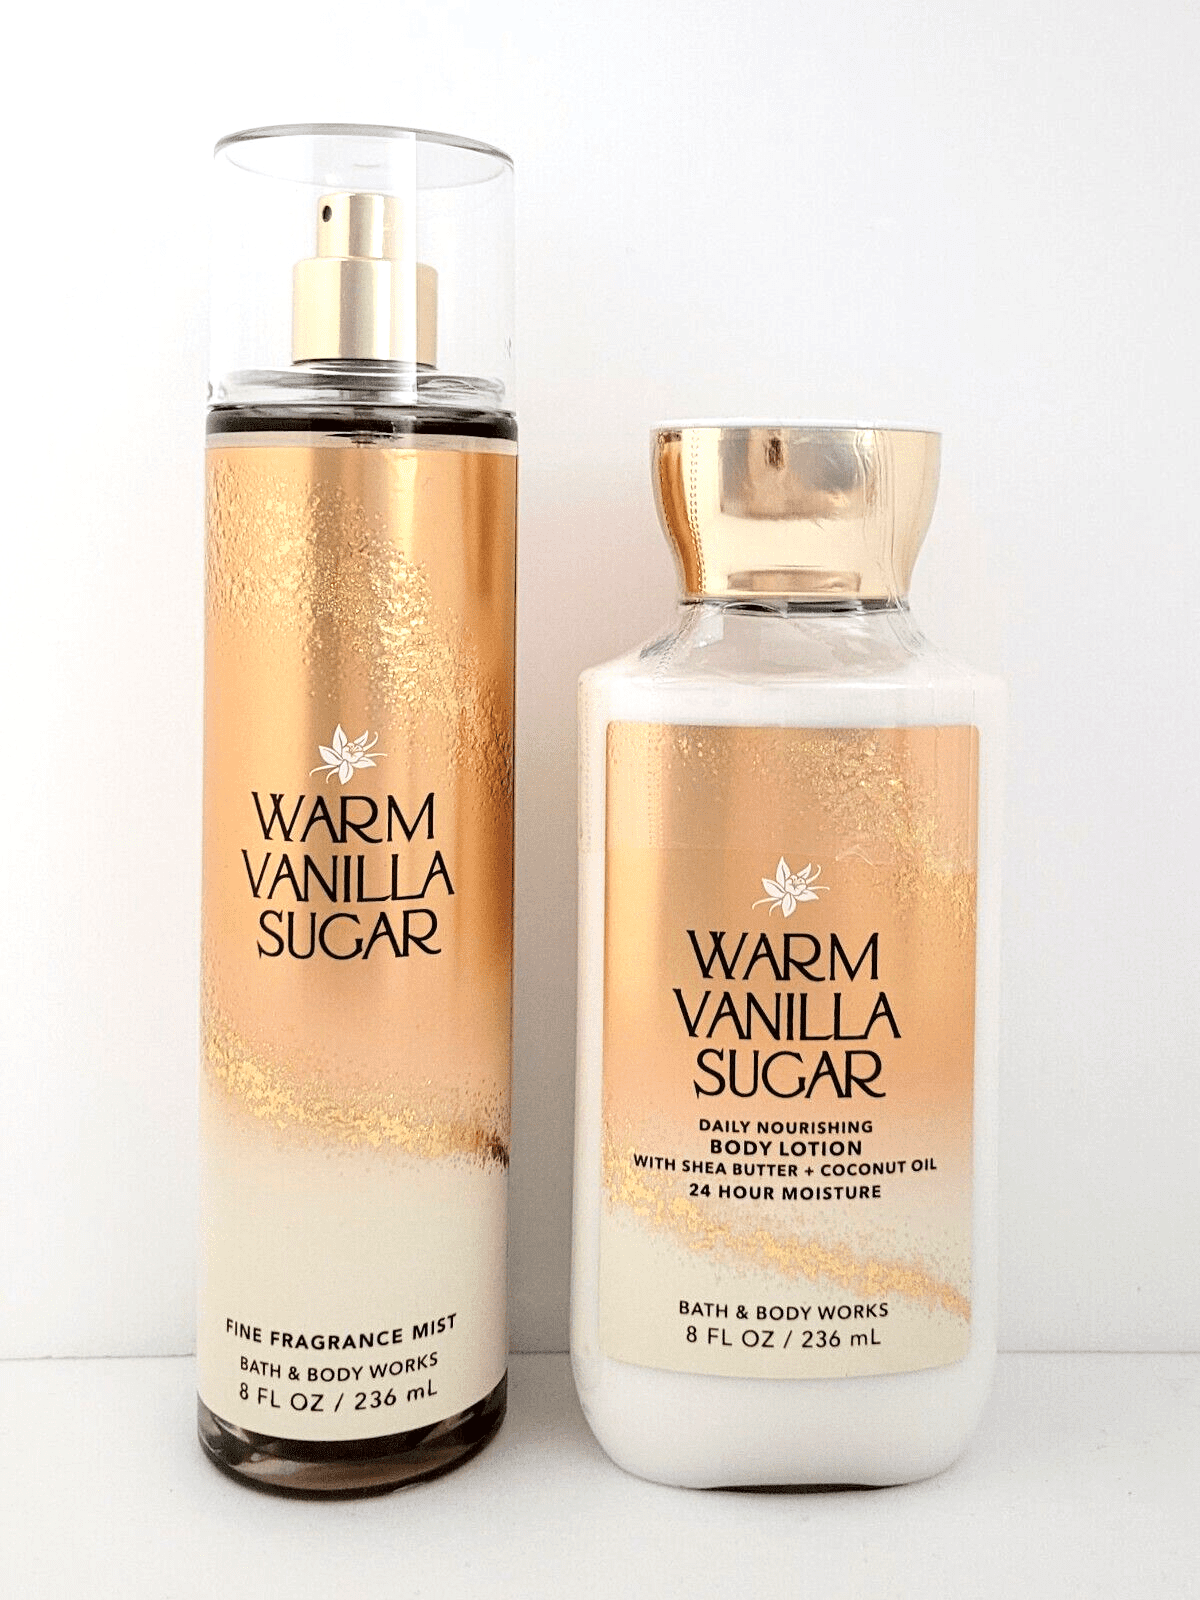 Bath & Body Works Warm Vanilla Sugar Fragrance Mist Review & Pictures